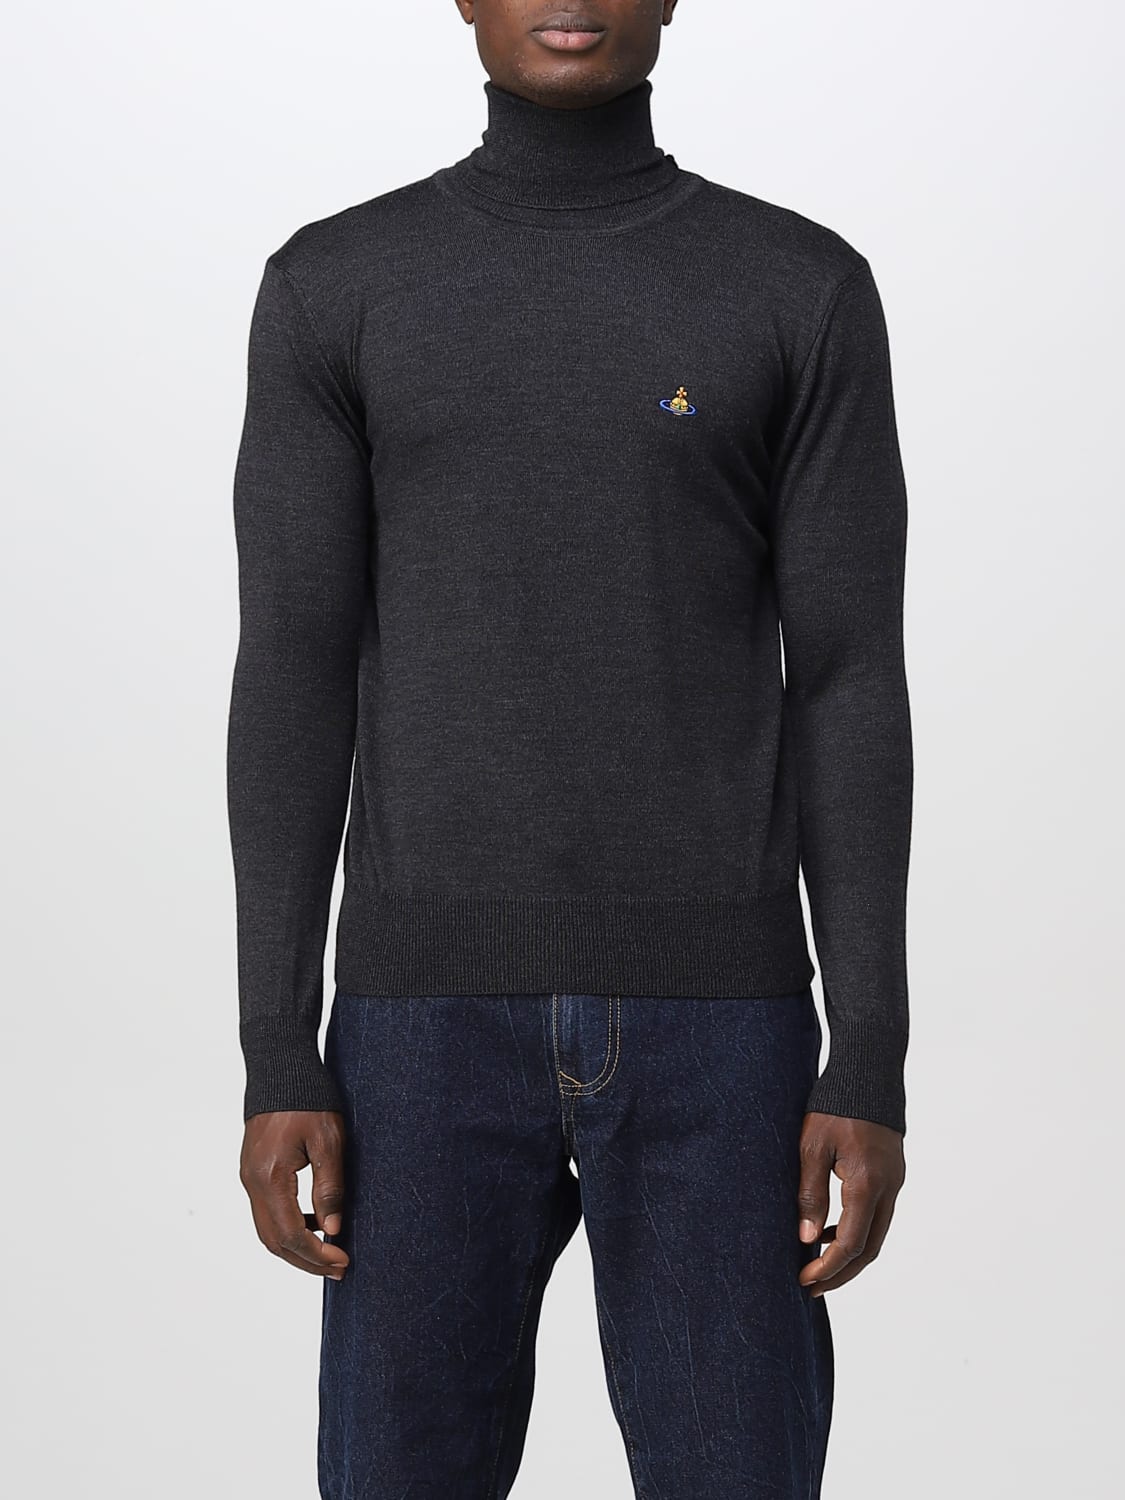 Vivienne Westwood Outlet: sweater for man - Black | Vivienne